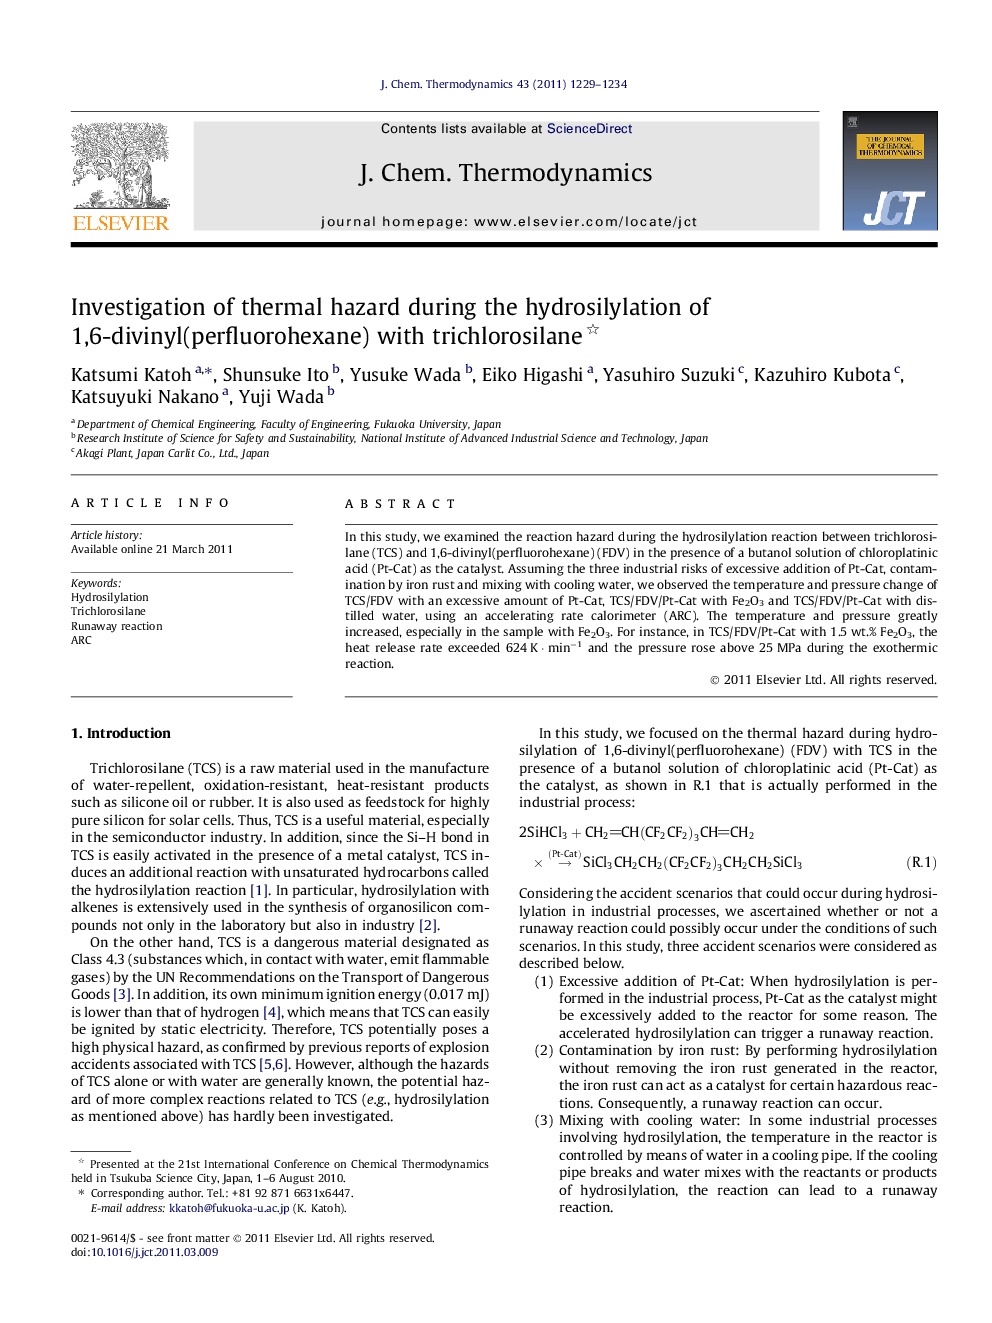 Investigation of thermal hazard during the hydrosilylation of 1,6-divinyl(perfluorohexane) with trichlorosilane 